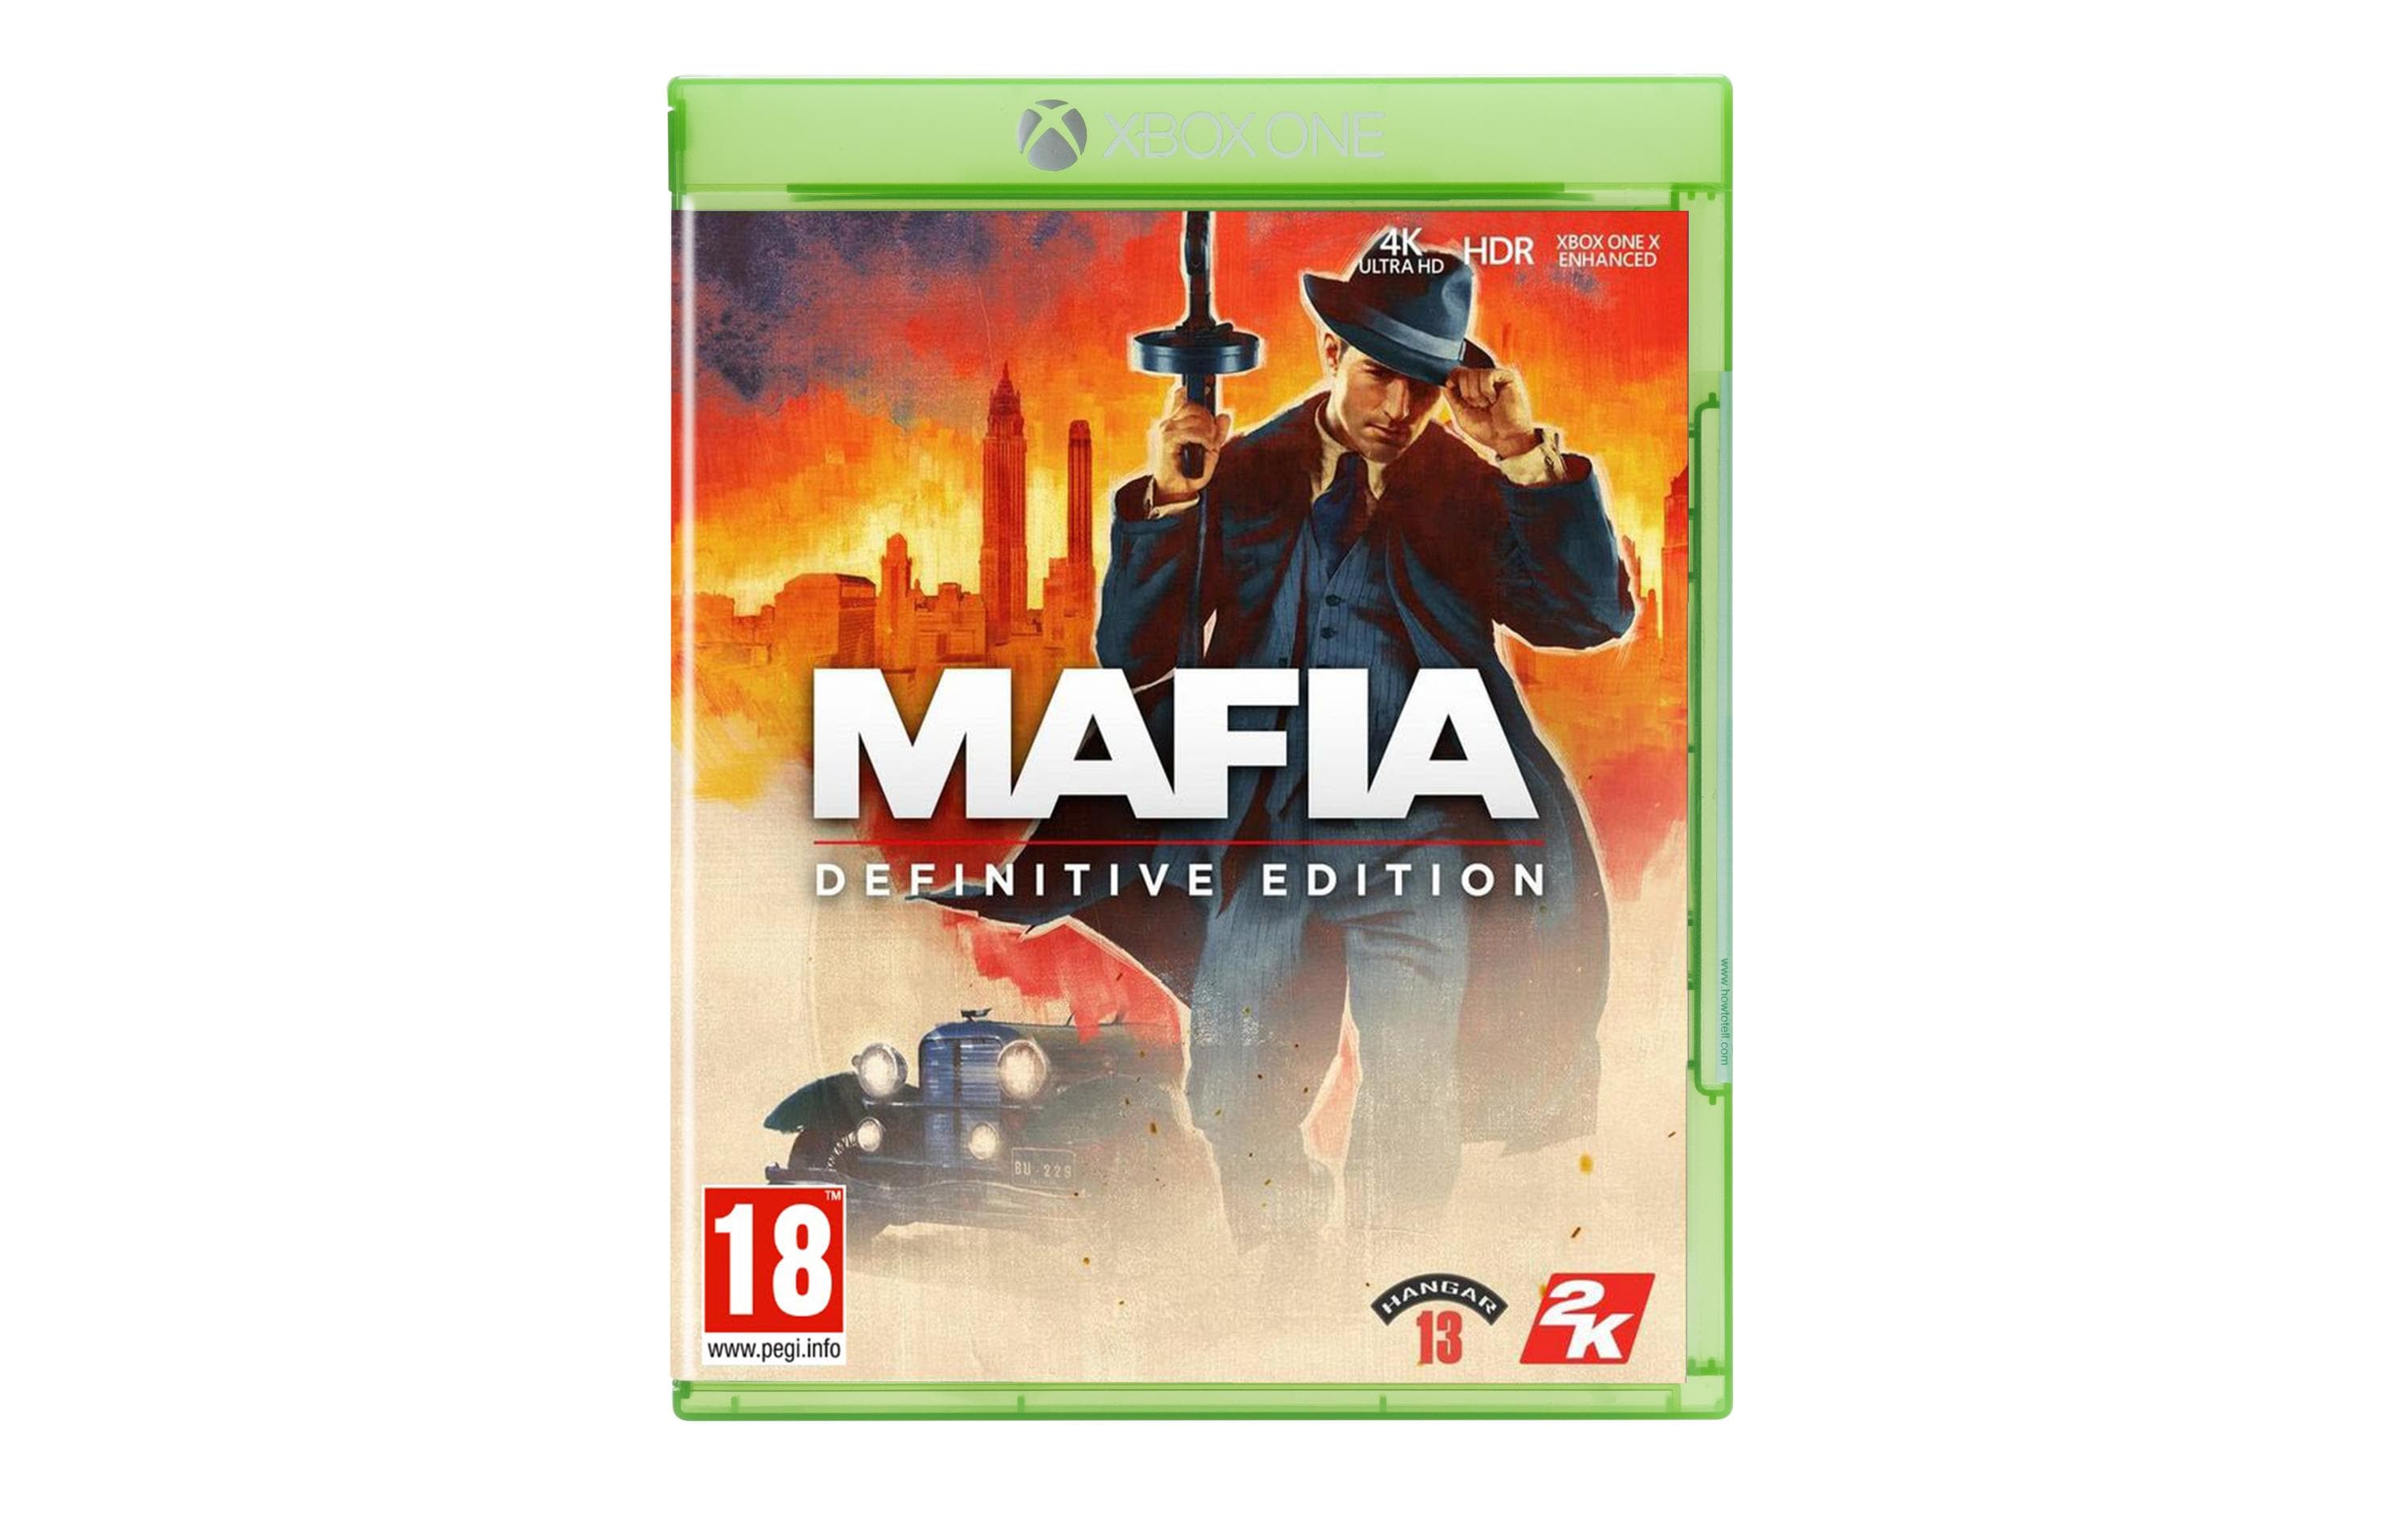 Take 2 Mafia 1 - Definitive Edition